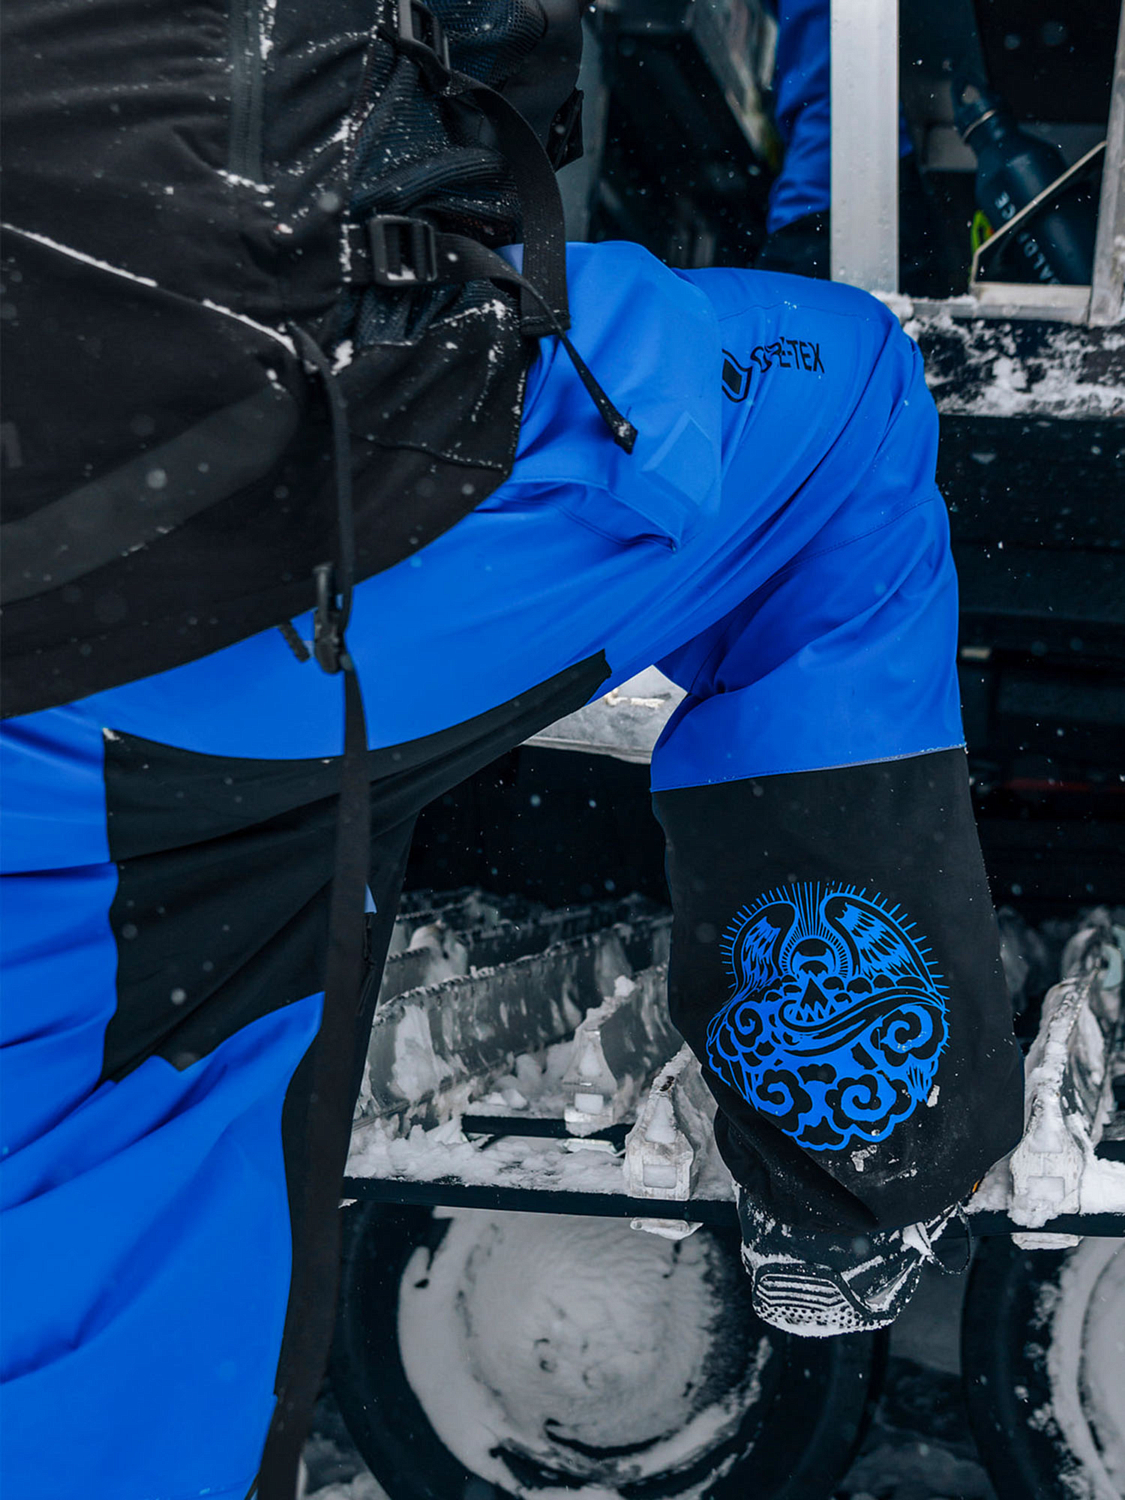 Комбинезон сноубордический Volcom Jamie Lynn Gore-Tex Jumpsuit Electric Blue